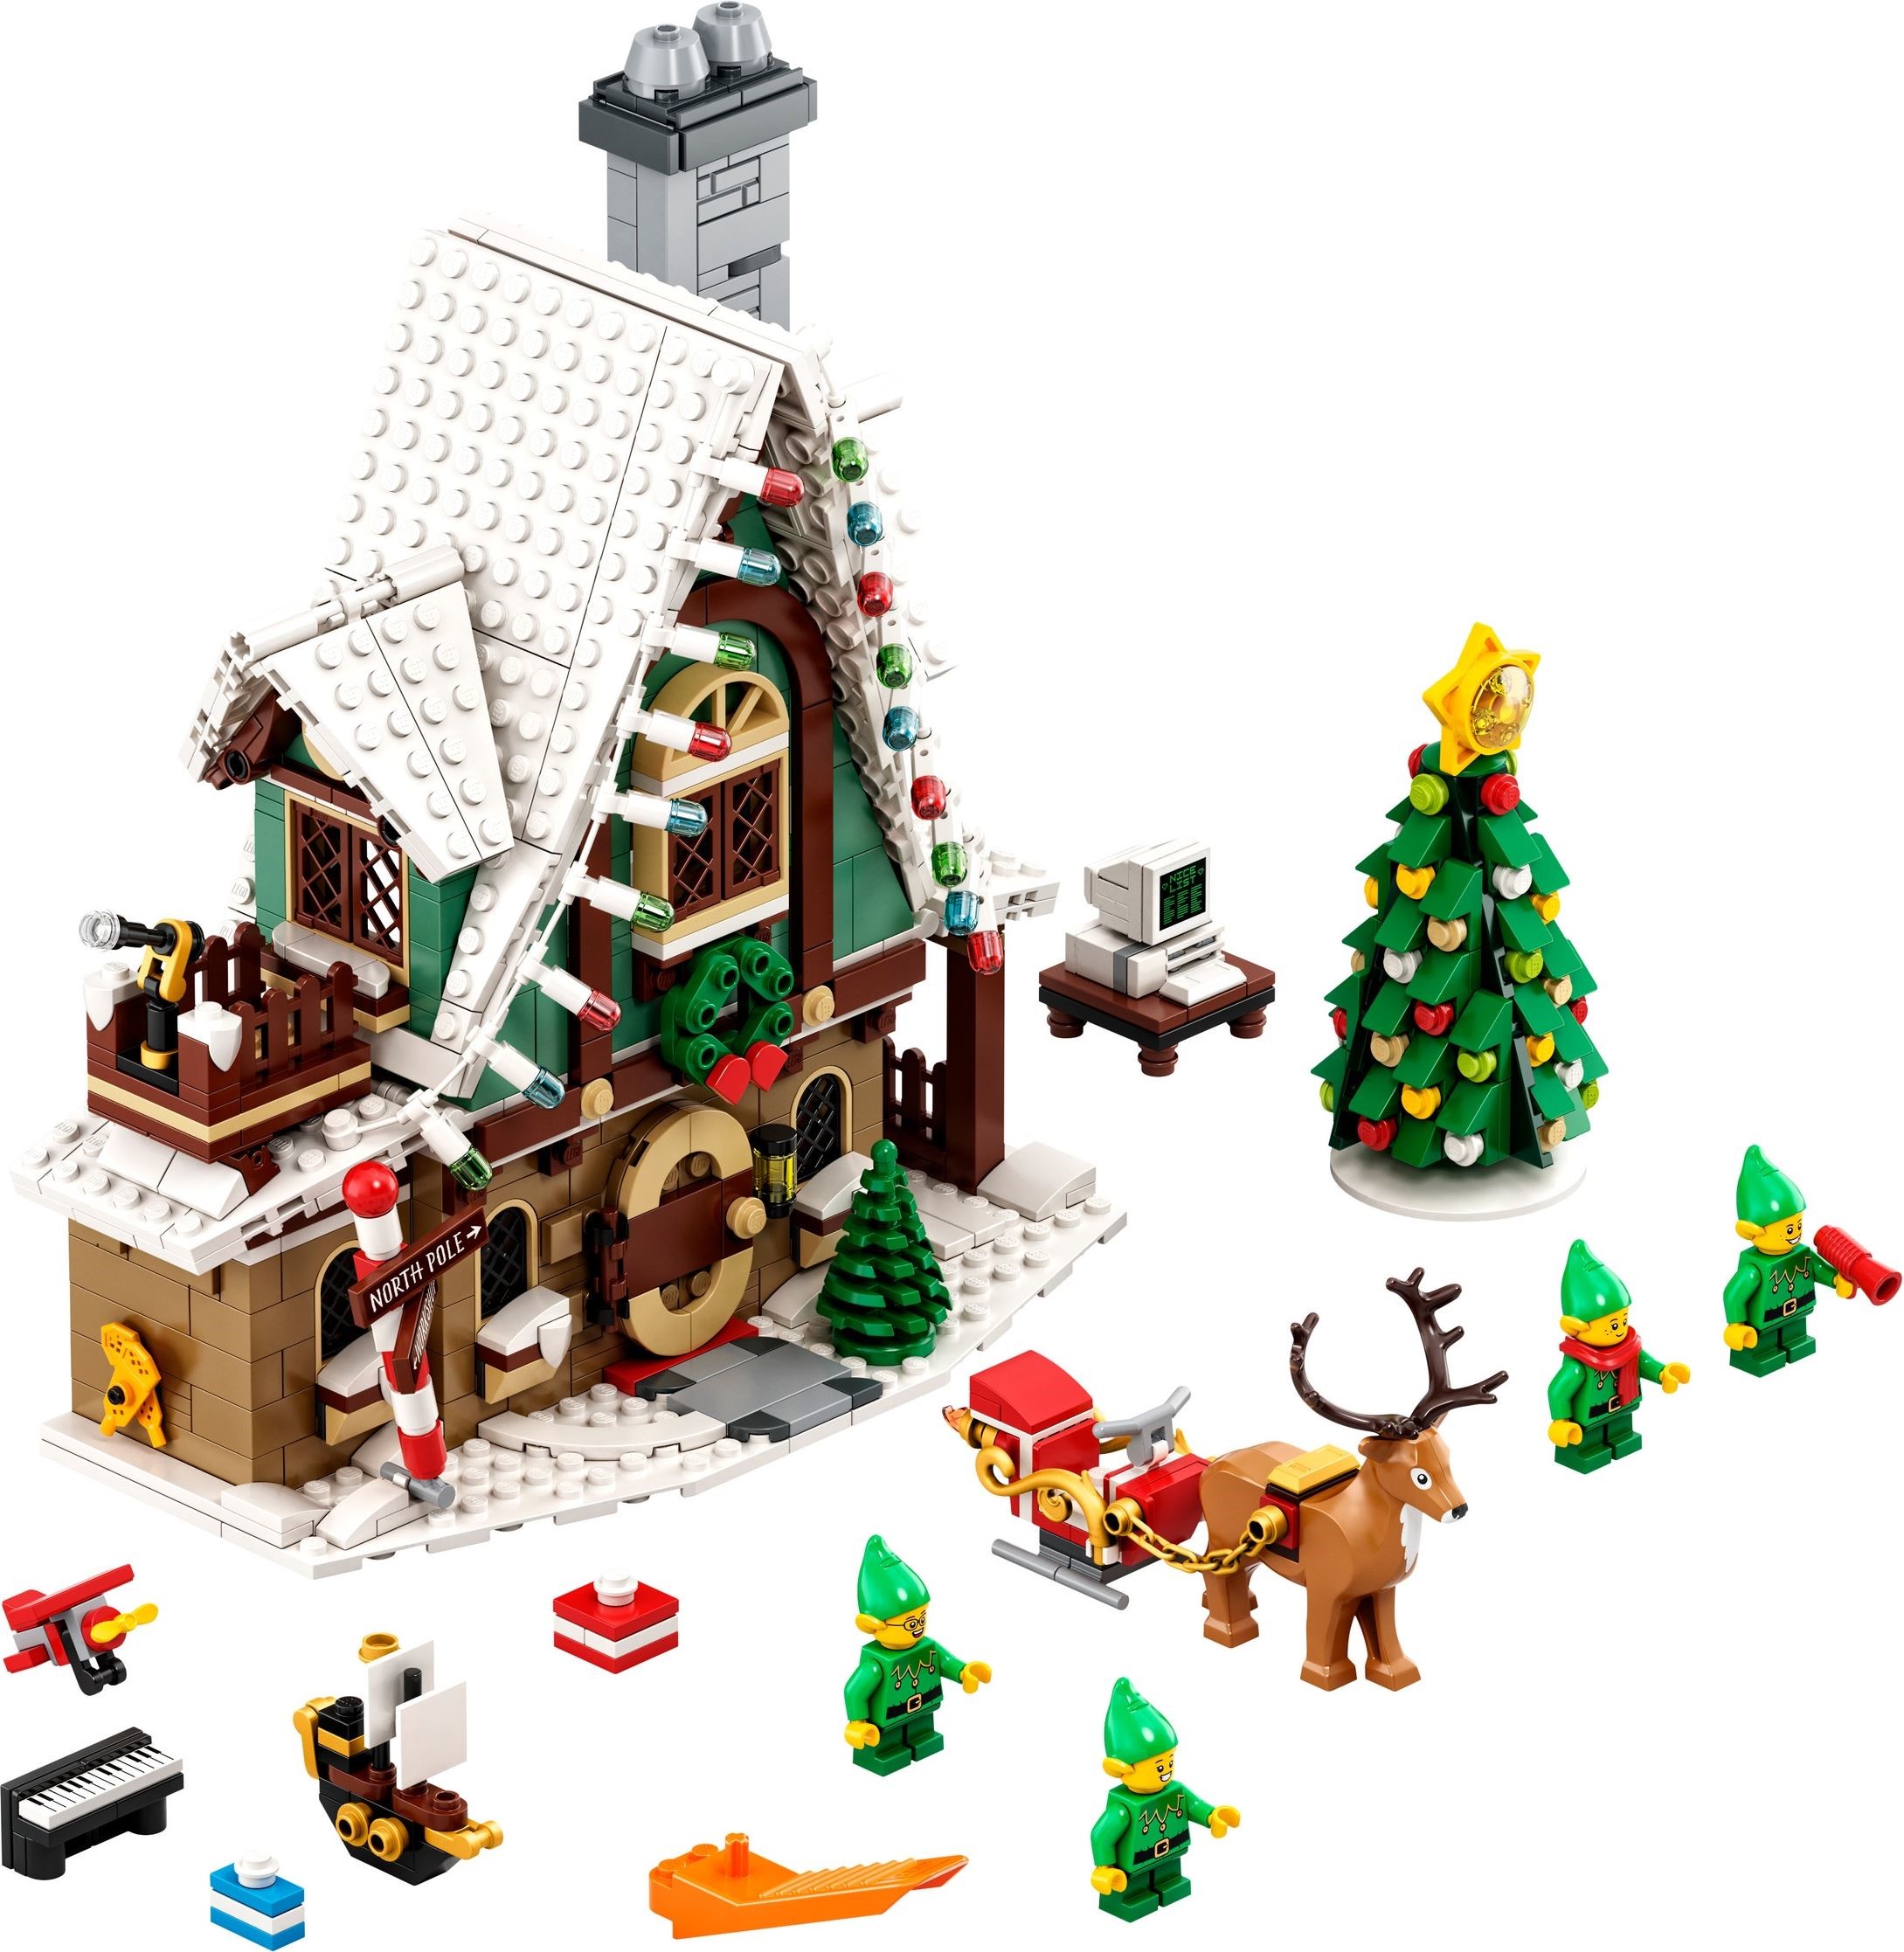 This year's Winter Village set revealed! Brickset